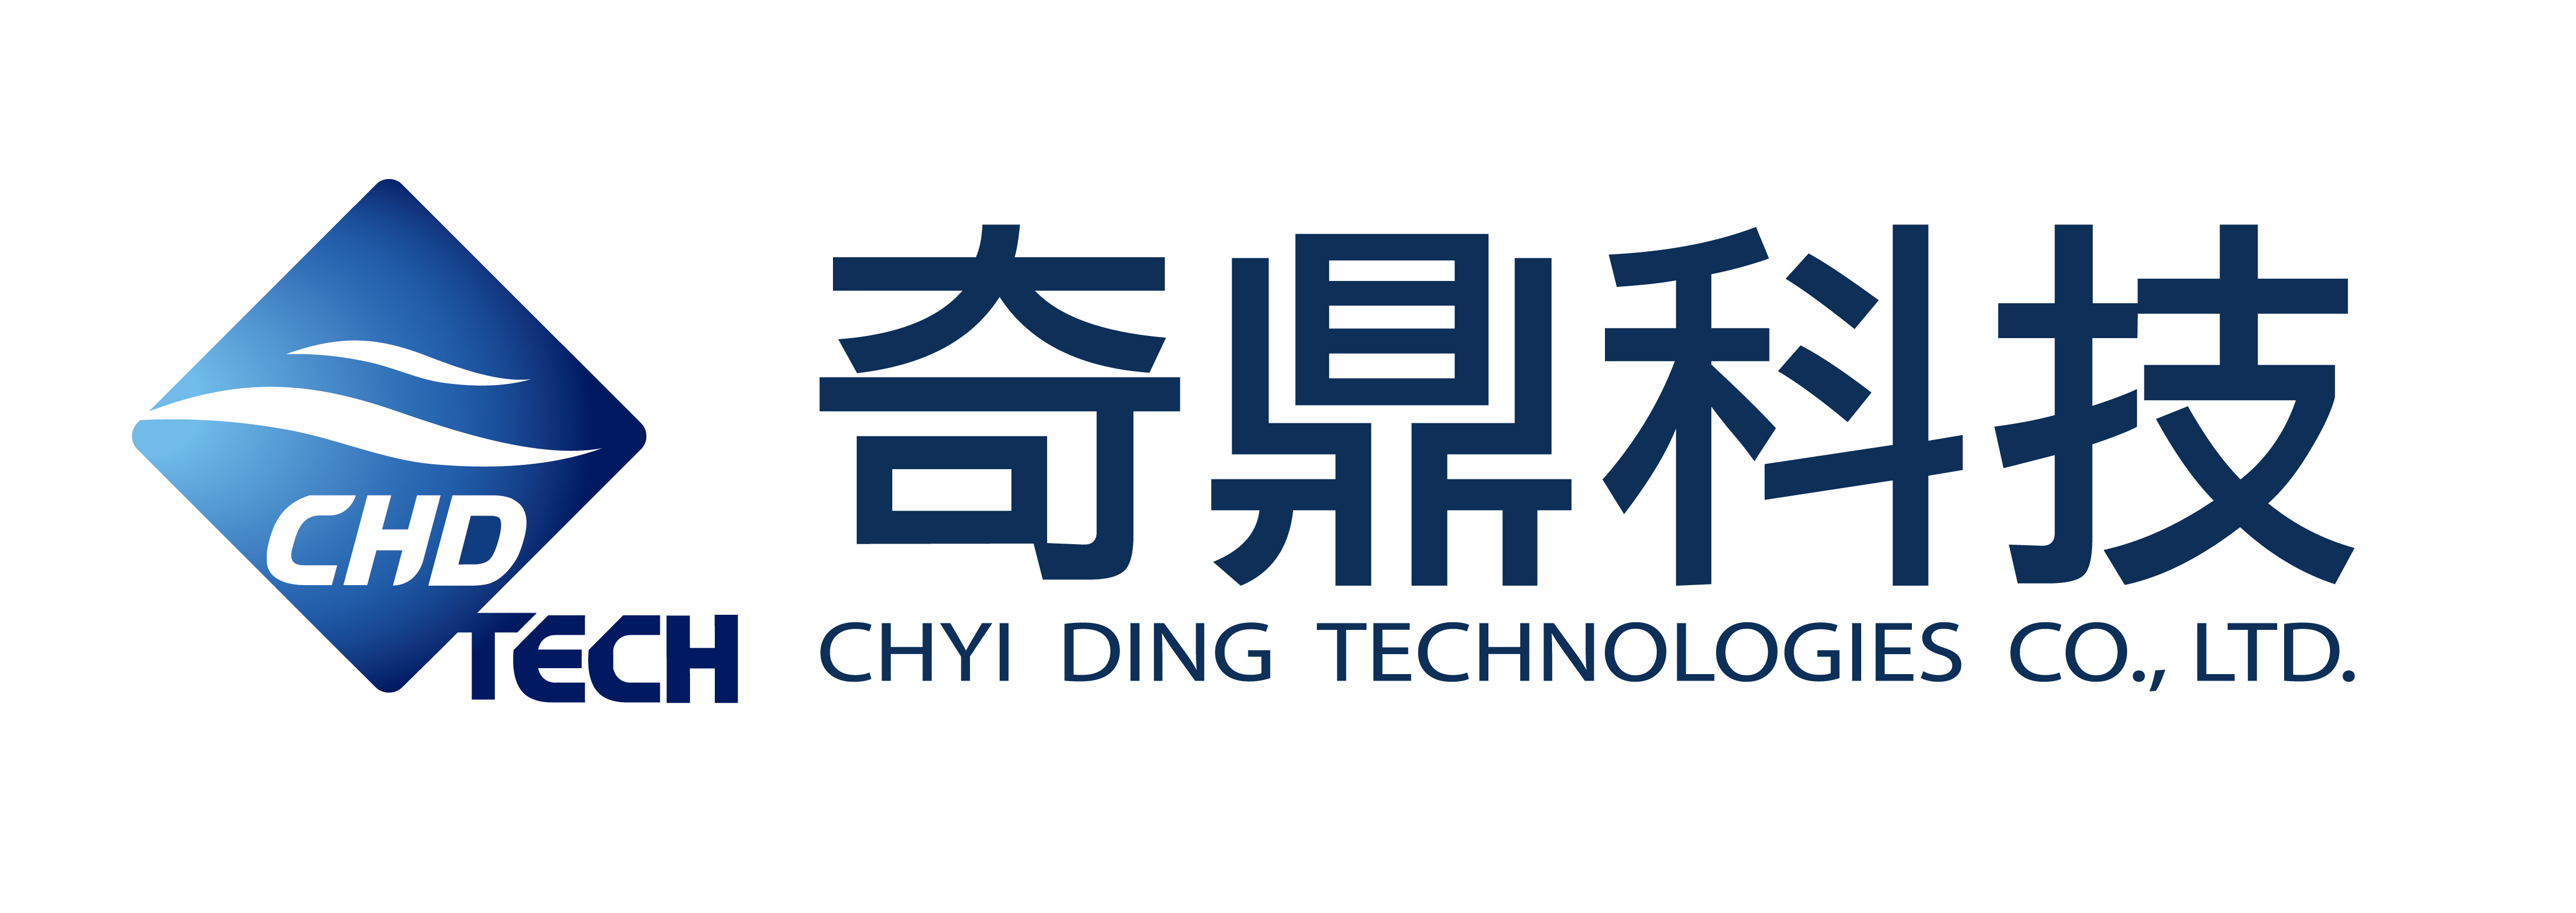 CHYI DING TECHNOLOGIES CO., LTD.-Logo